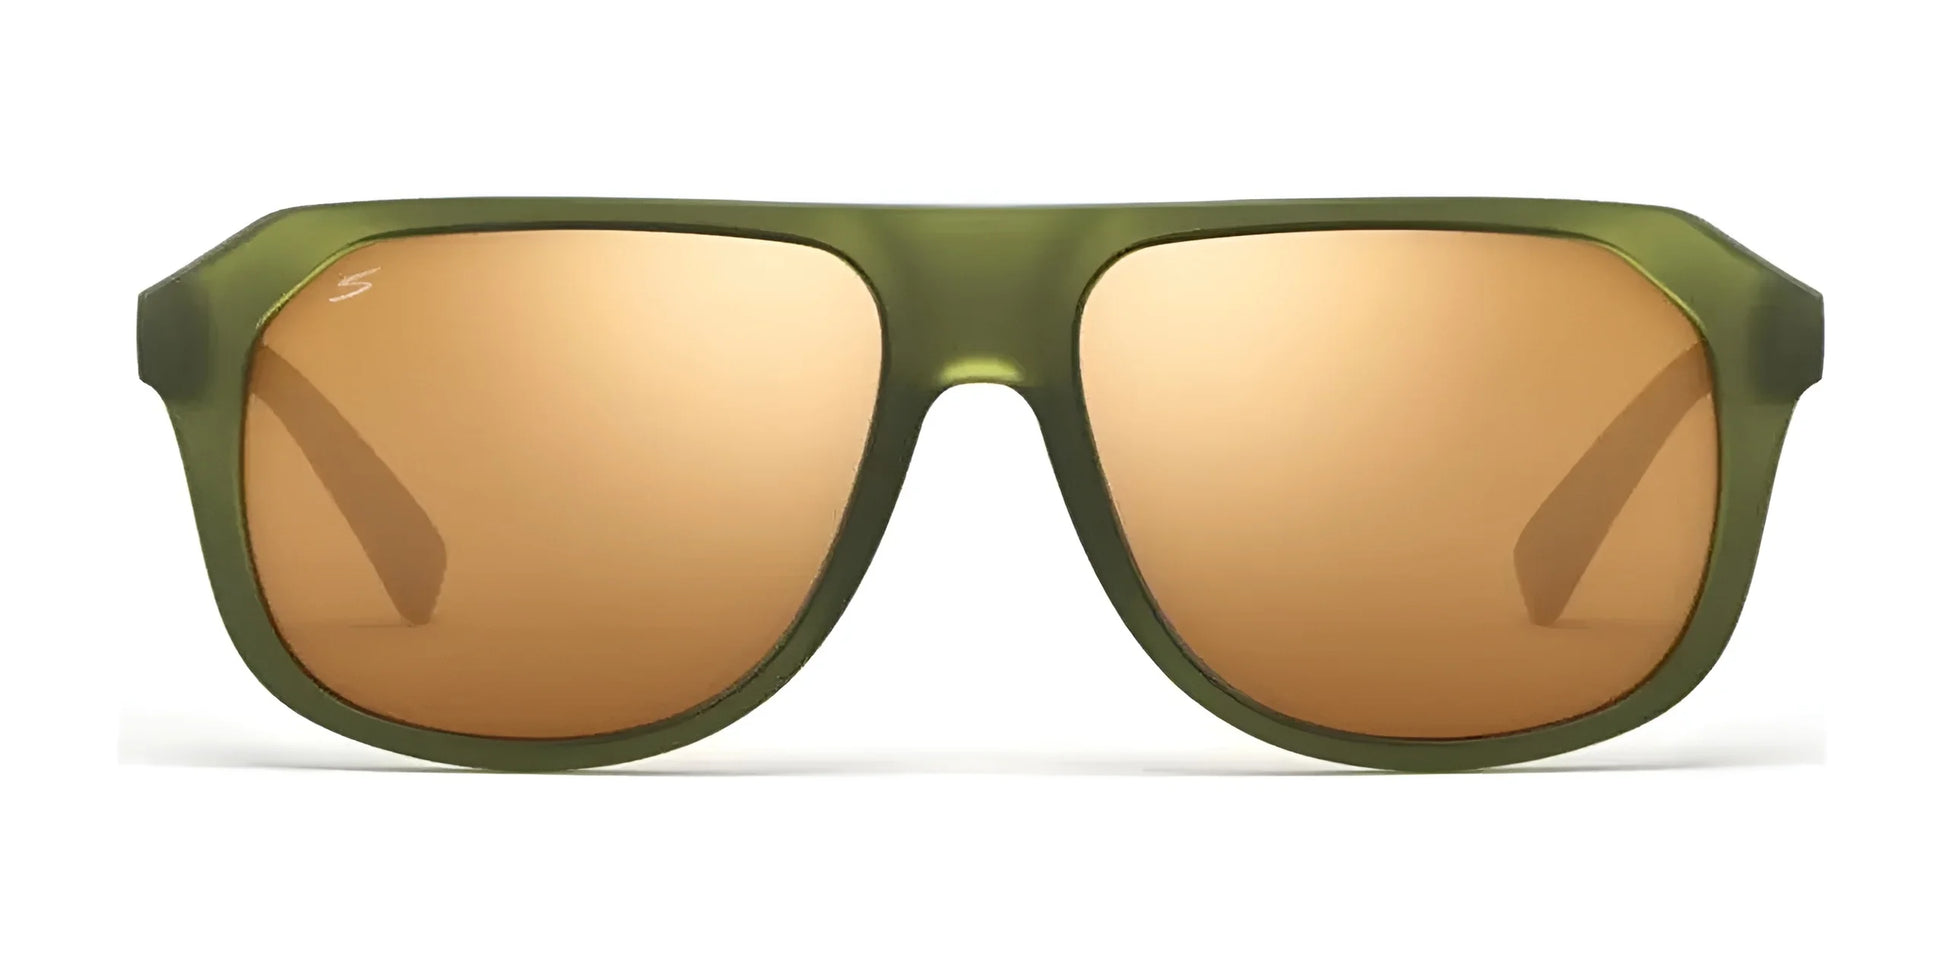 Serengeti Oatman Sunglasses Frosted Khaki / Saturn Polarized Drivers Gold Cat 2 to 3